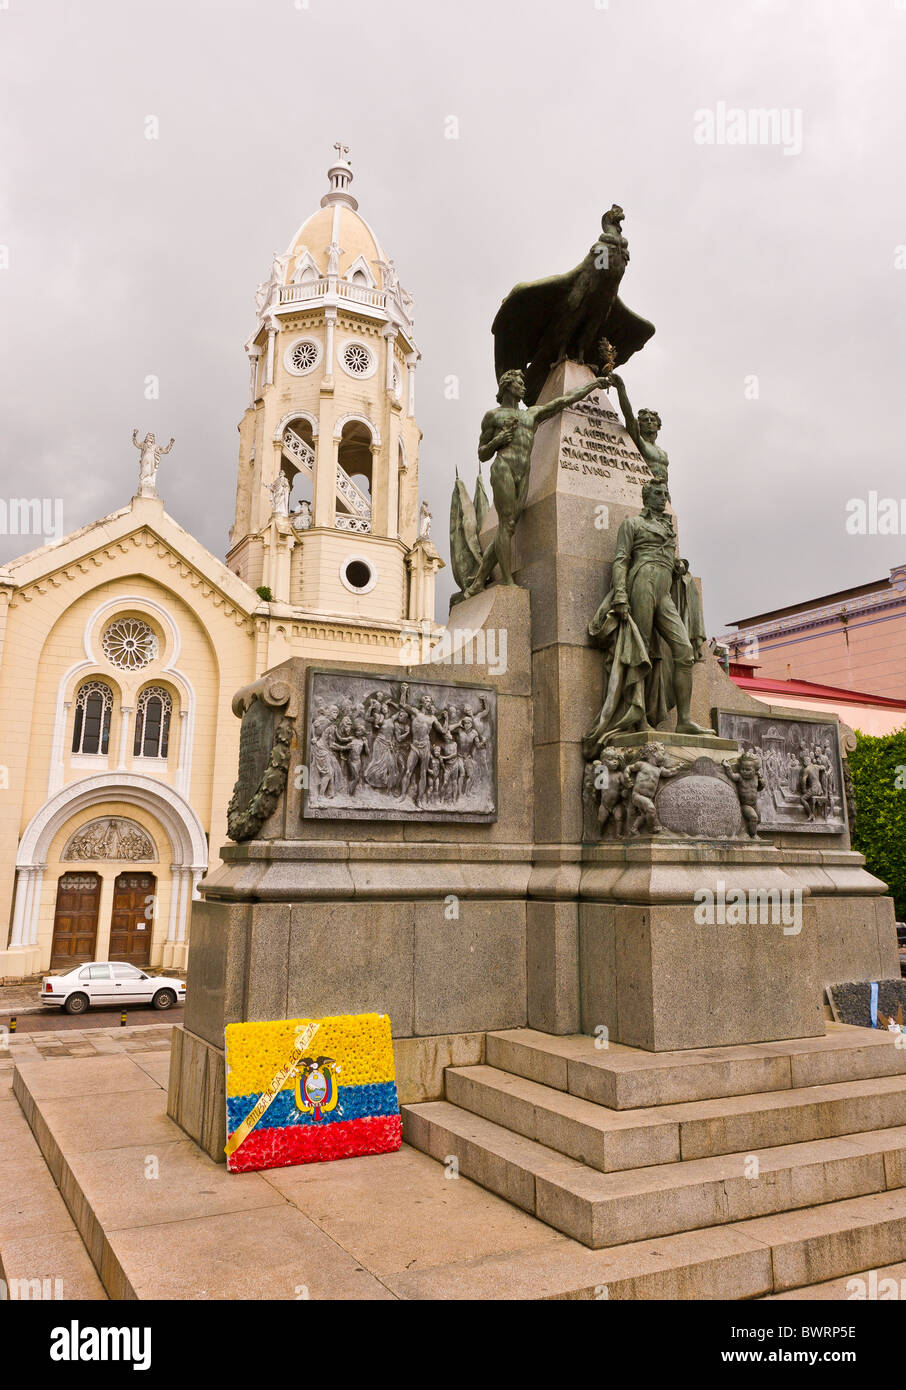 PANAMA-Stadt, PANAMA - Plaza Bolivar in Casco Viejo, historischen Zentrum der Stadt. Stockfoto